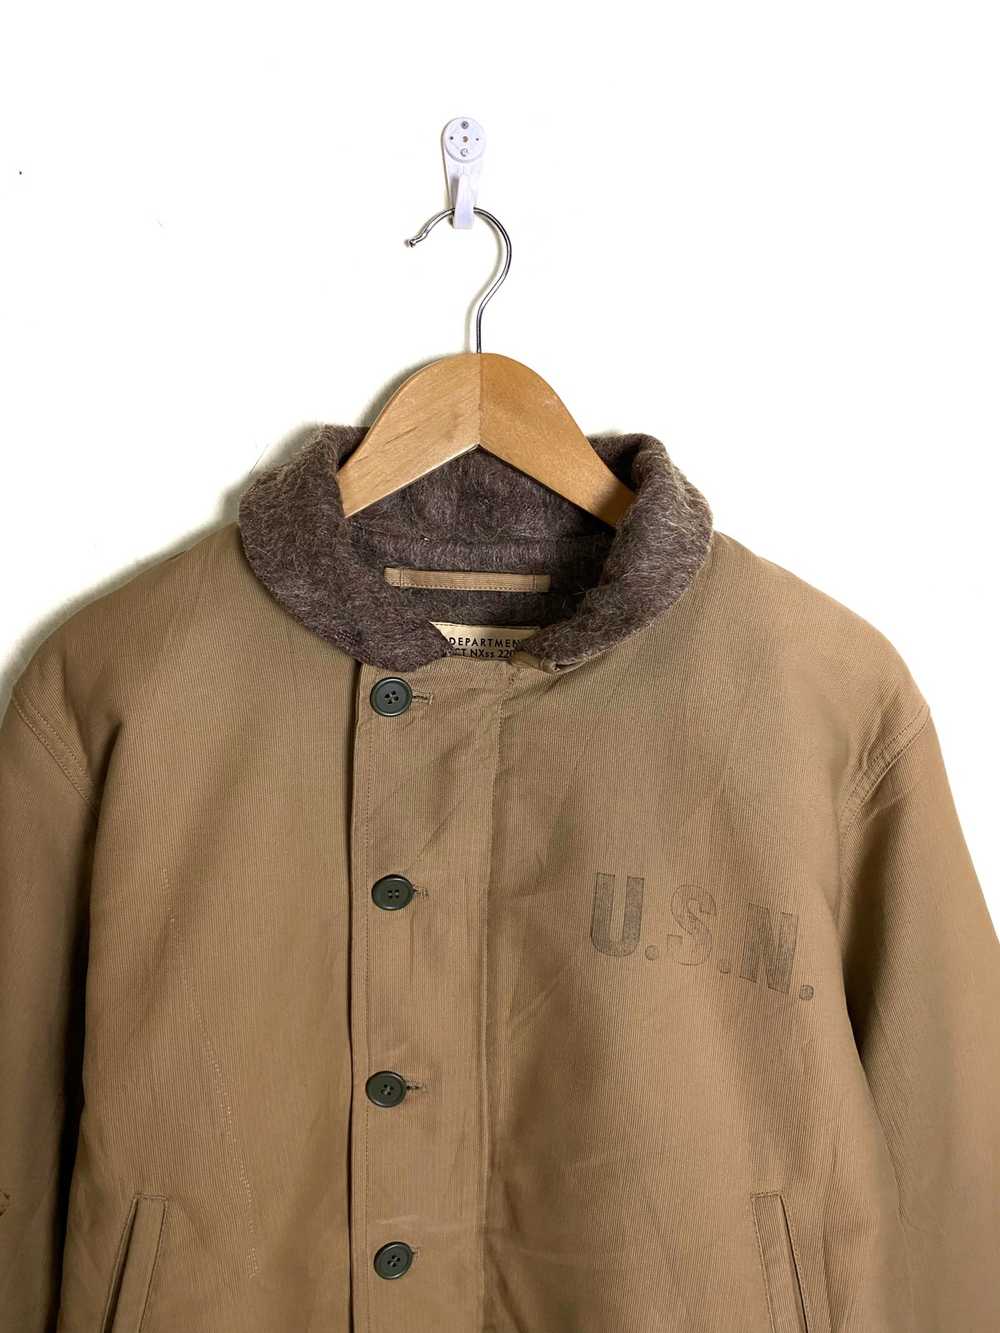 Buzz Rickson's - Vintage N-1 USN Deck Jacket - image 2